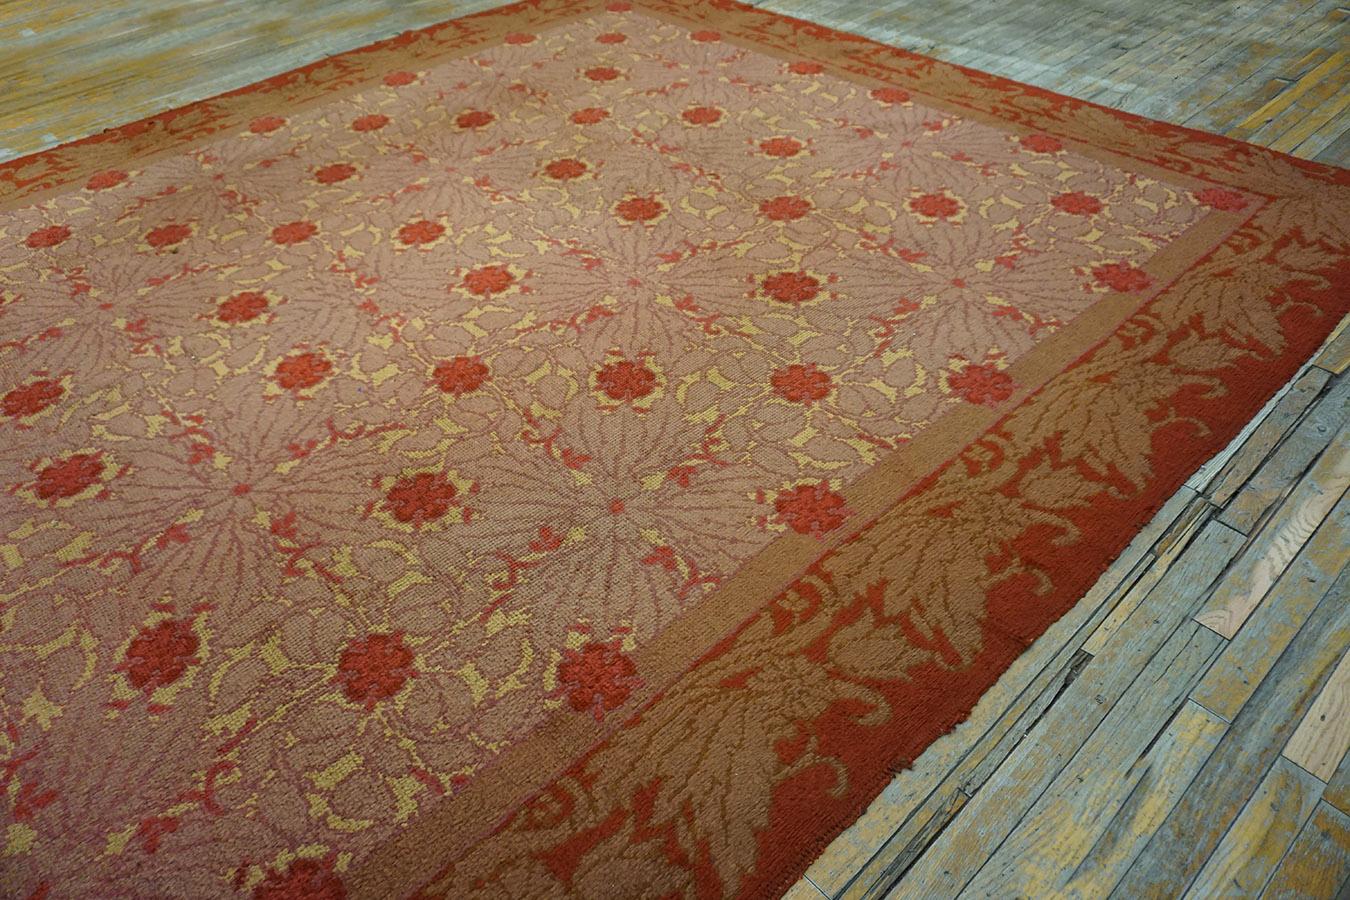 Early 20th Century Irish Donegal Arts & Crafts Carpet (10'8